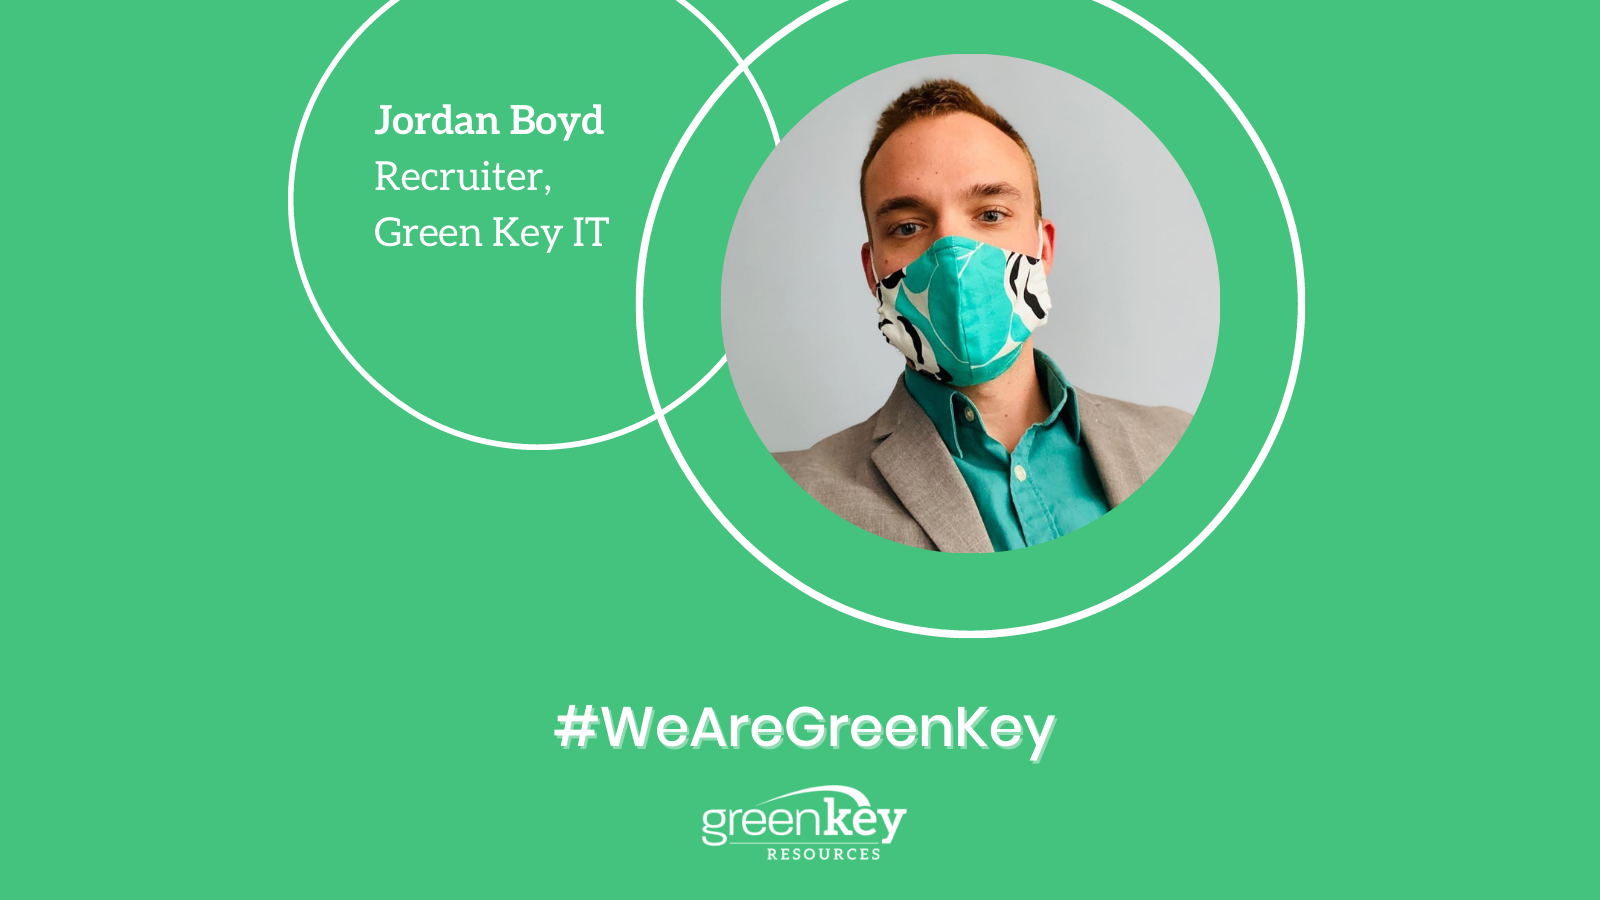 Jordan Boyd, Senior Recruiter - Green Key IT